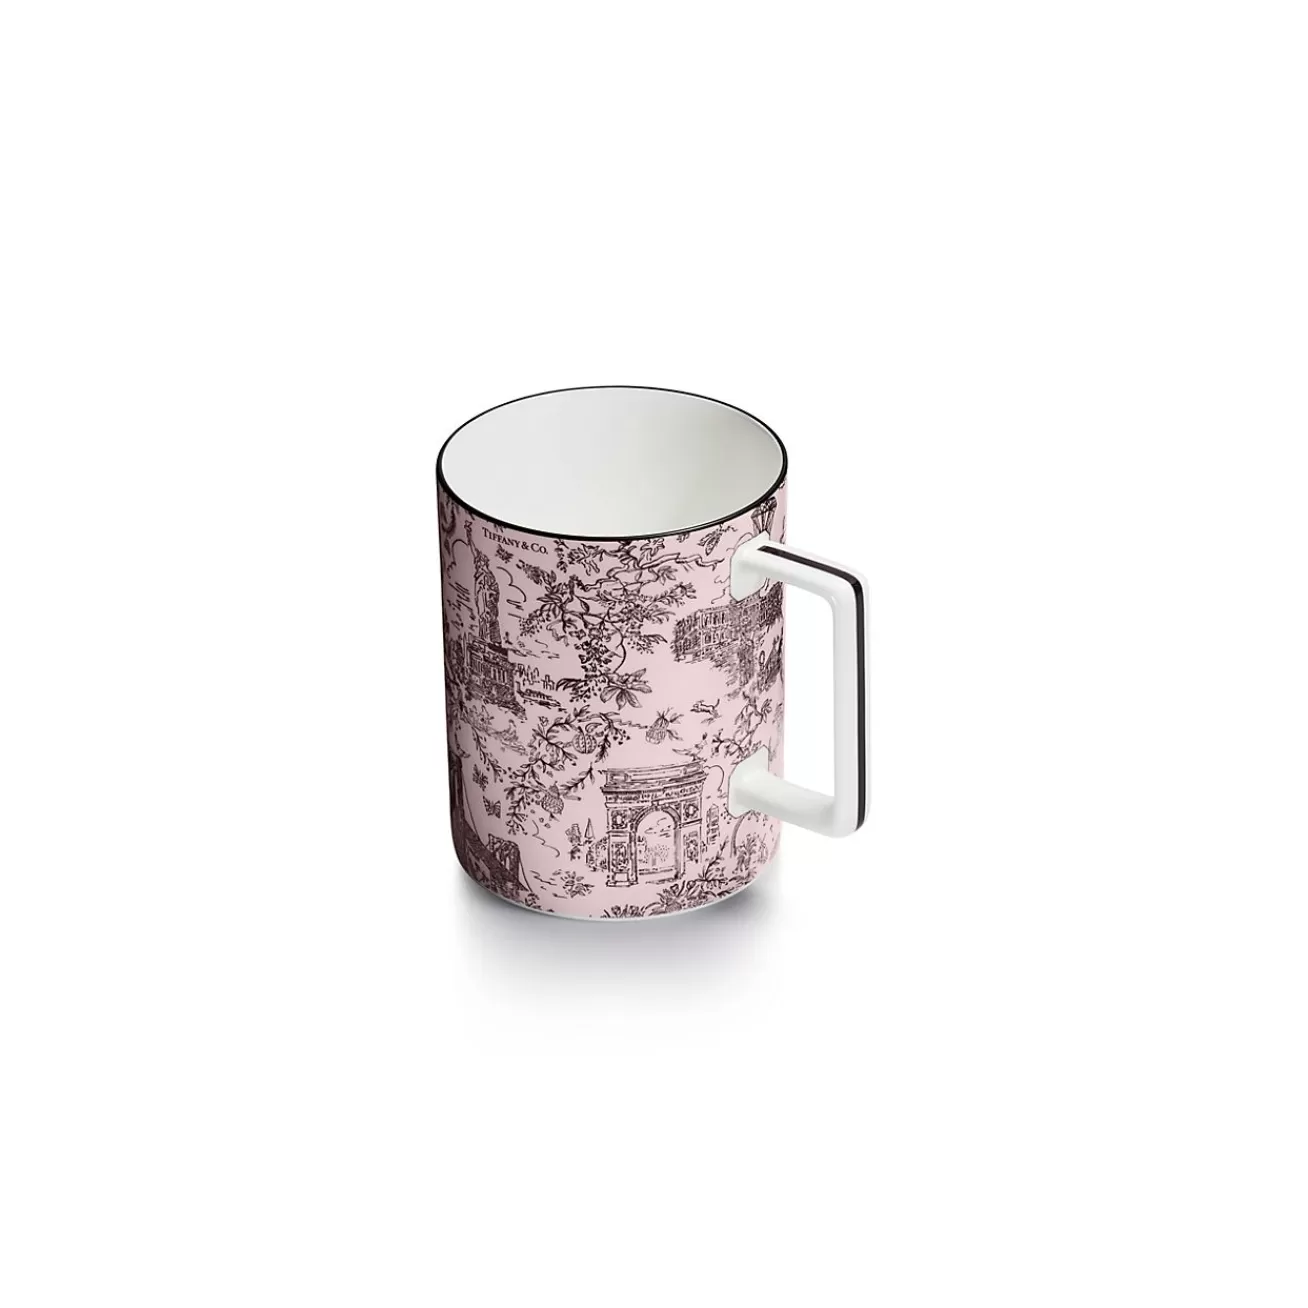 Tiffany & Co. Tiffany Toile Mug in Morganite Bone China | ^ The Home | Housewarming Gifts